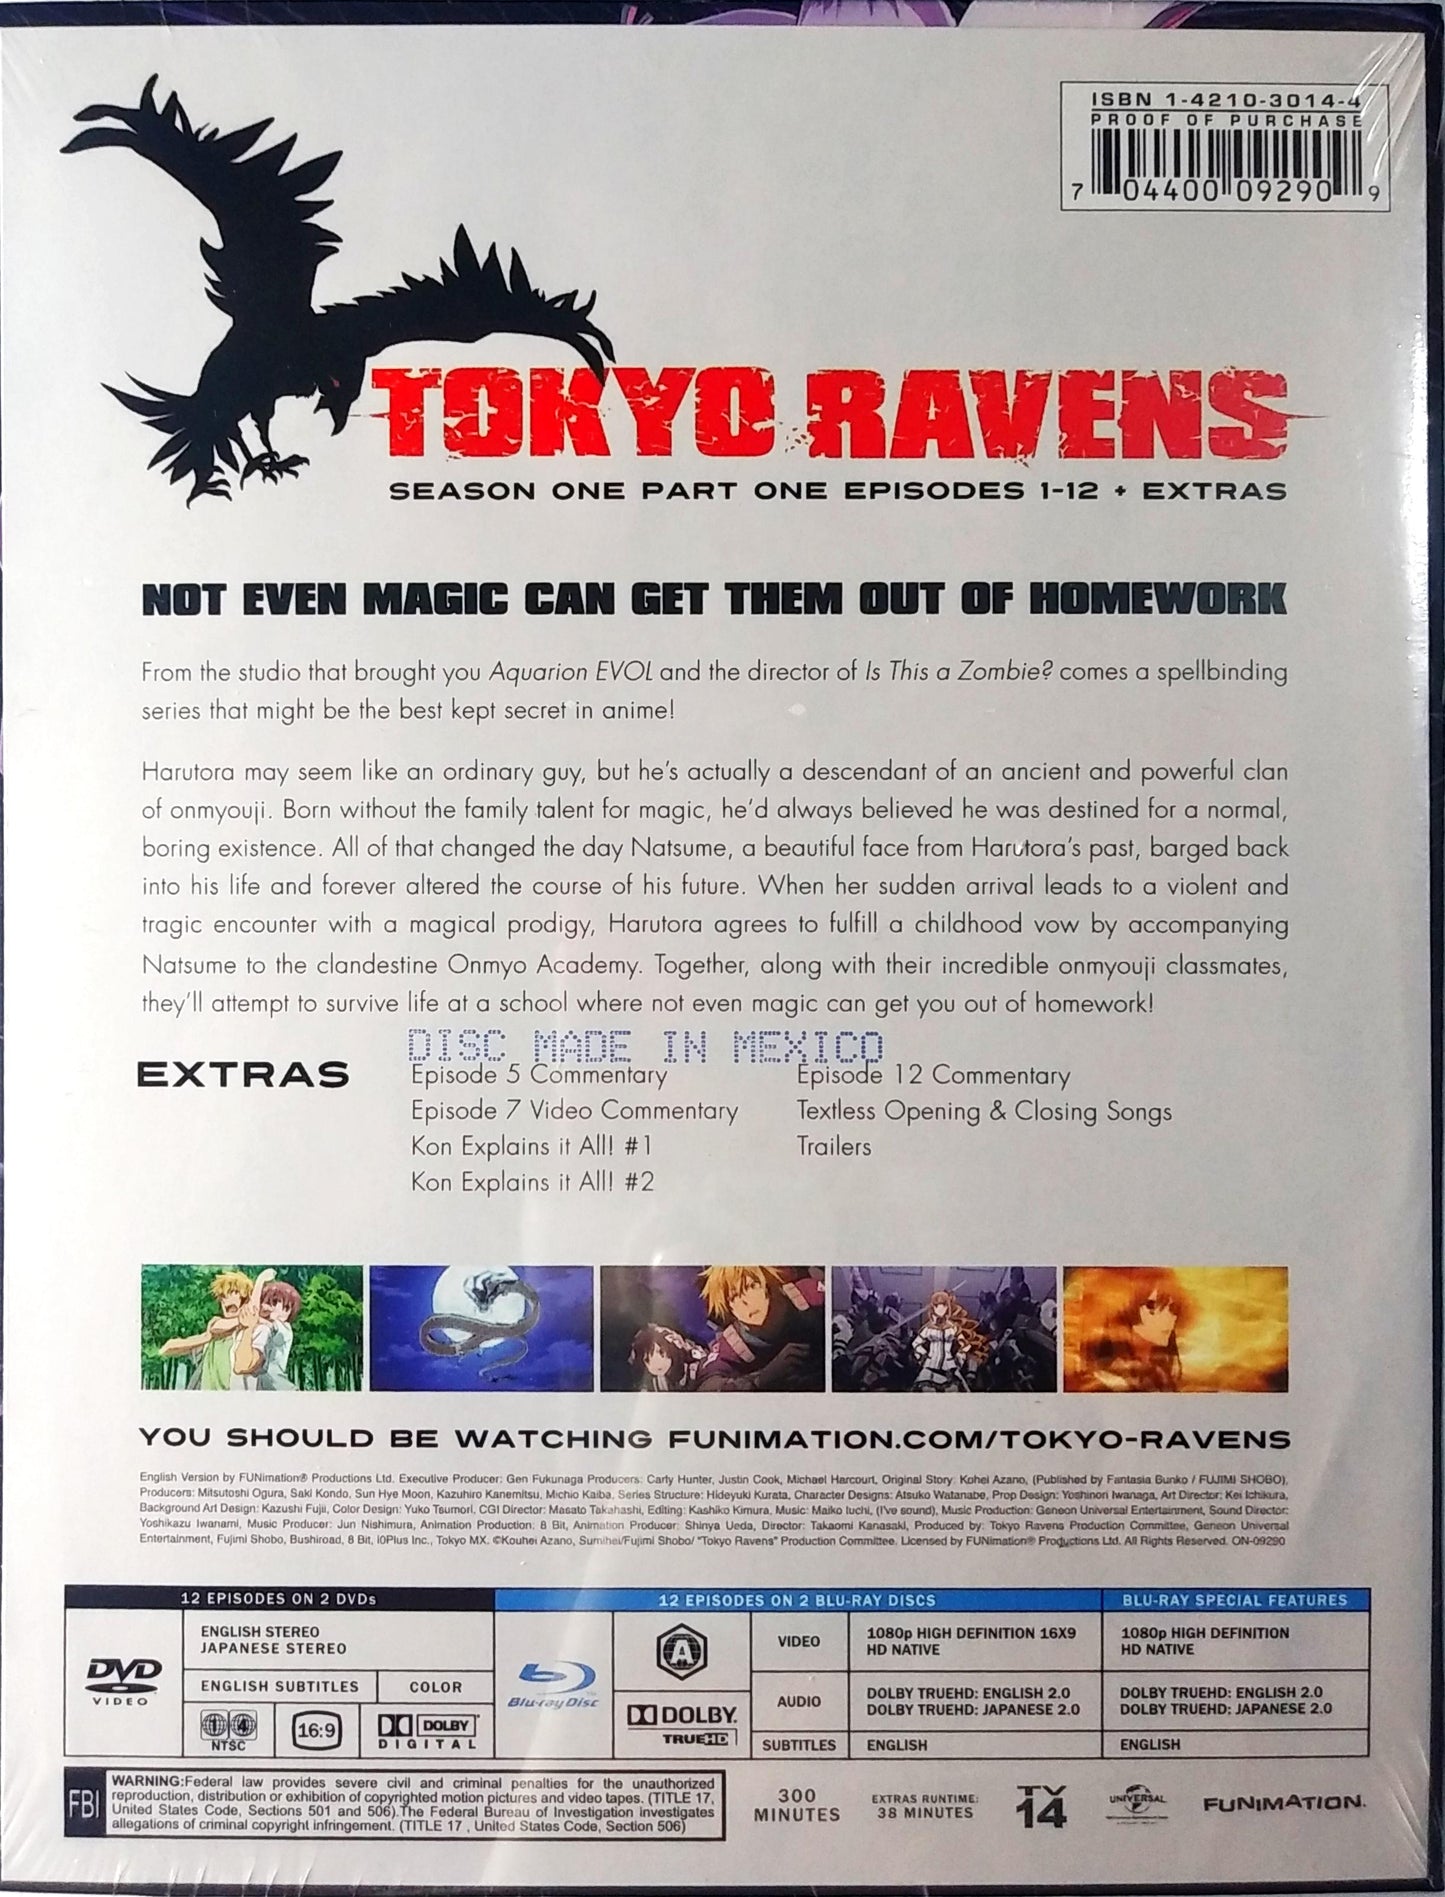 Ver Tokyo Ravens Season 1 Part 2